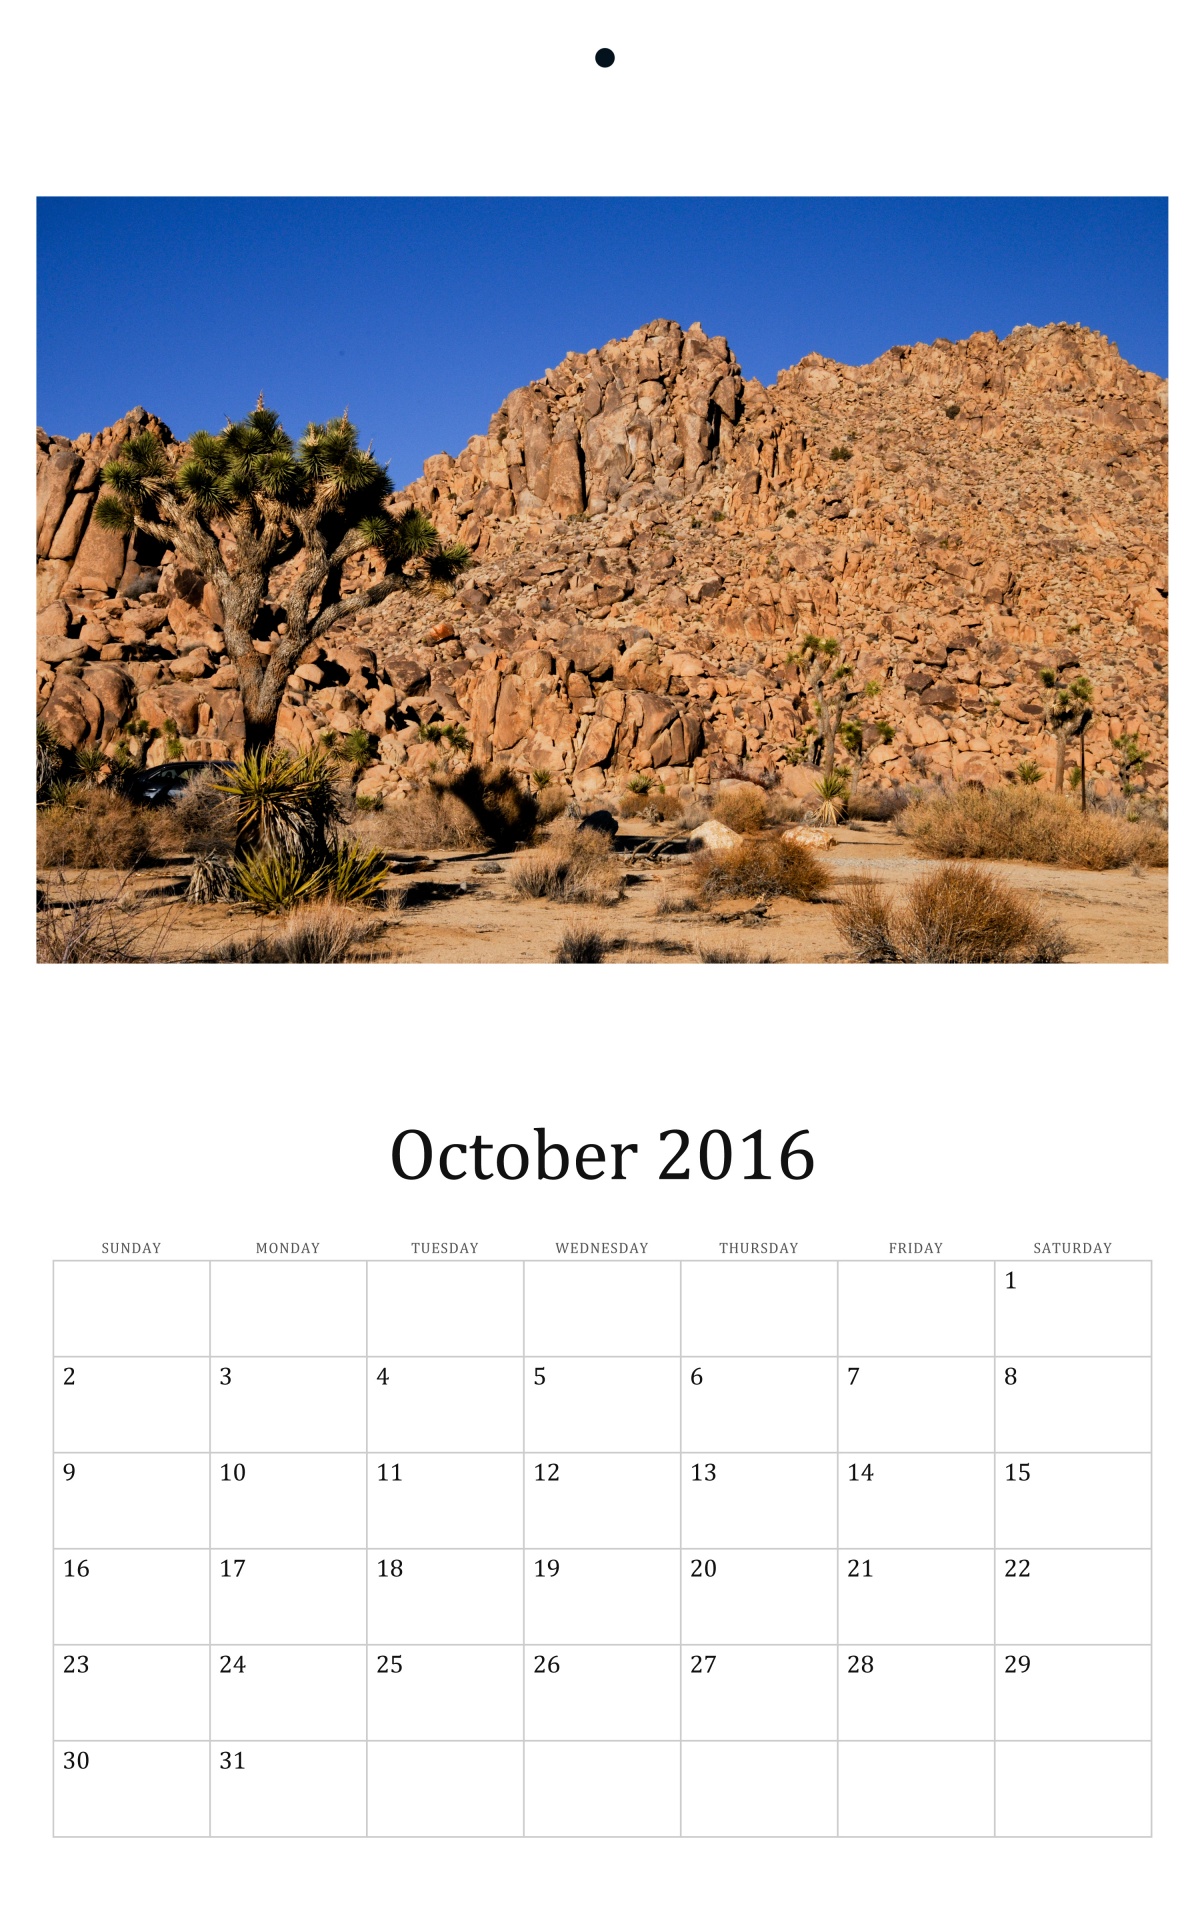 october-2018-holidays-calendar-october-calendar-2018-printable